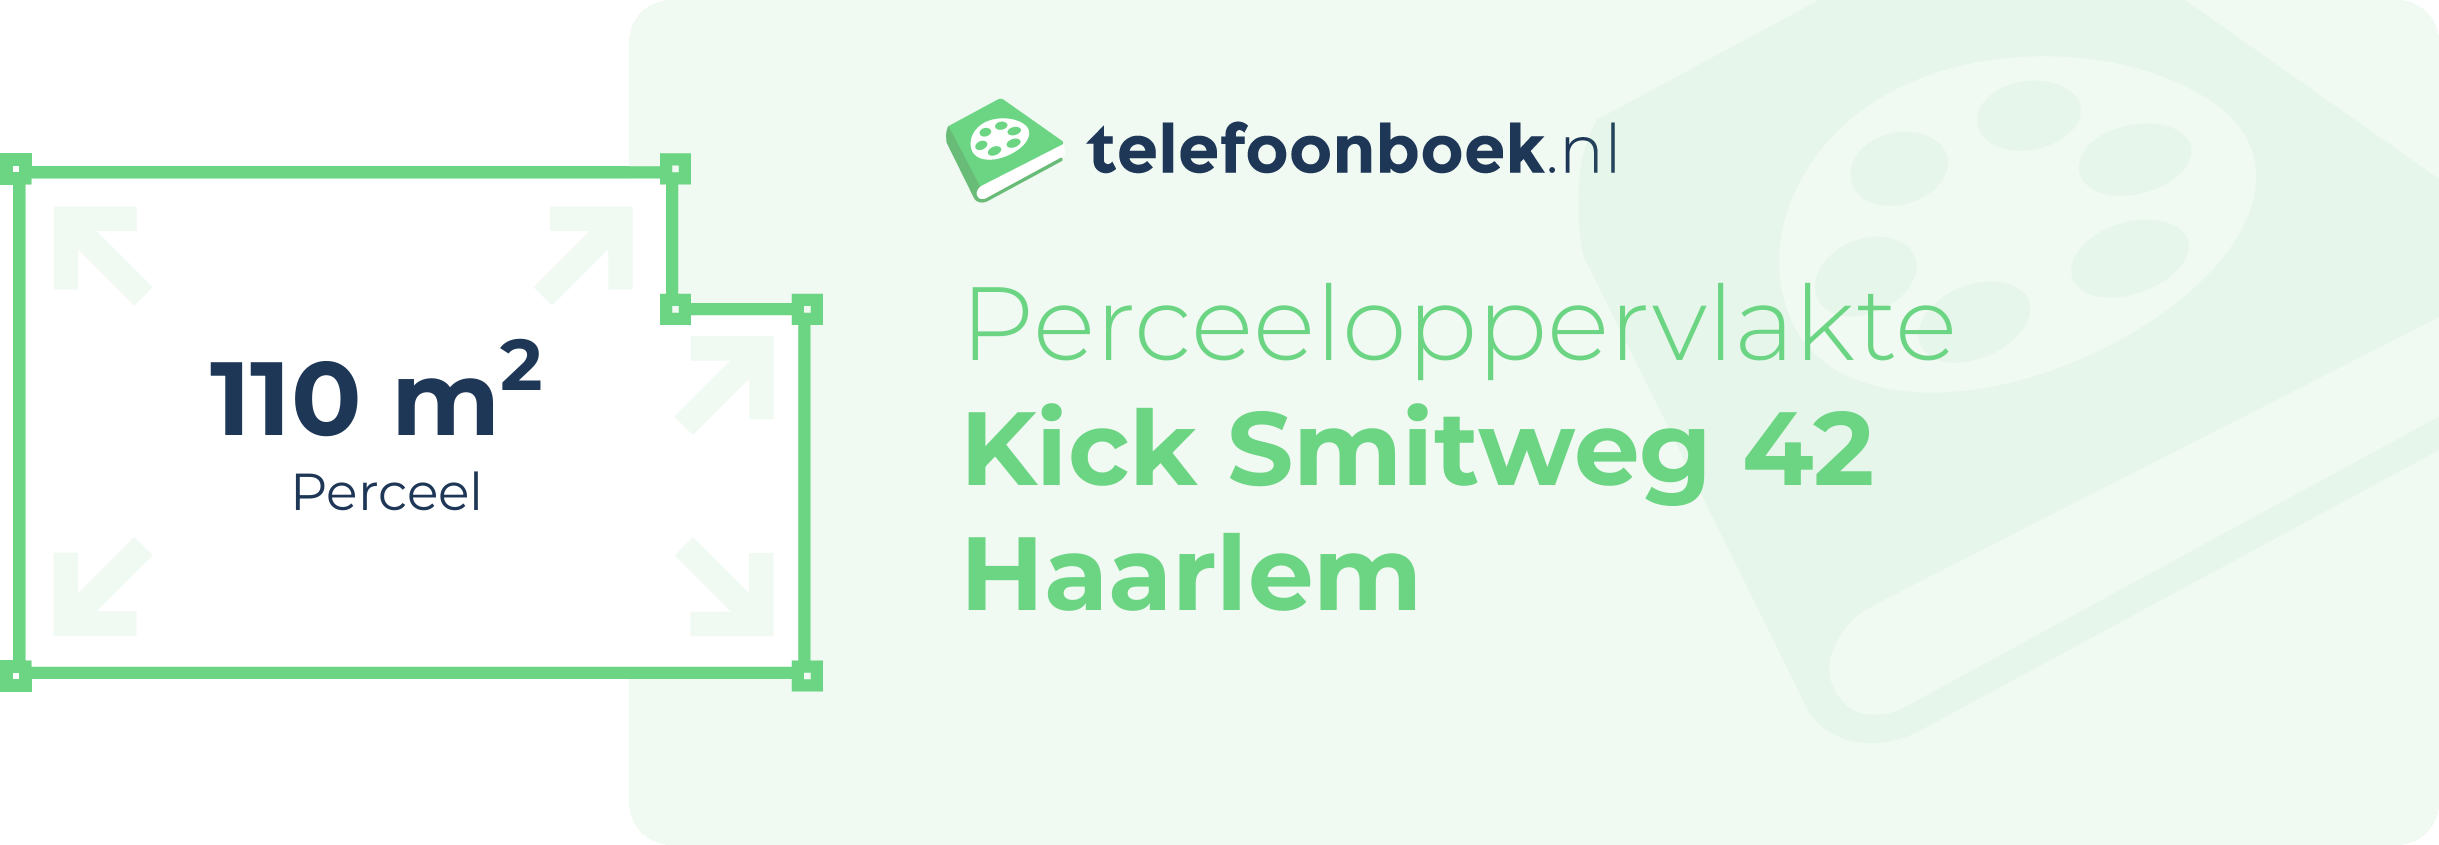 Perceeloppervlakte Kick Smitweg 42 Haarlem